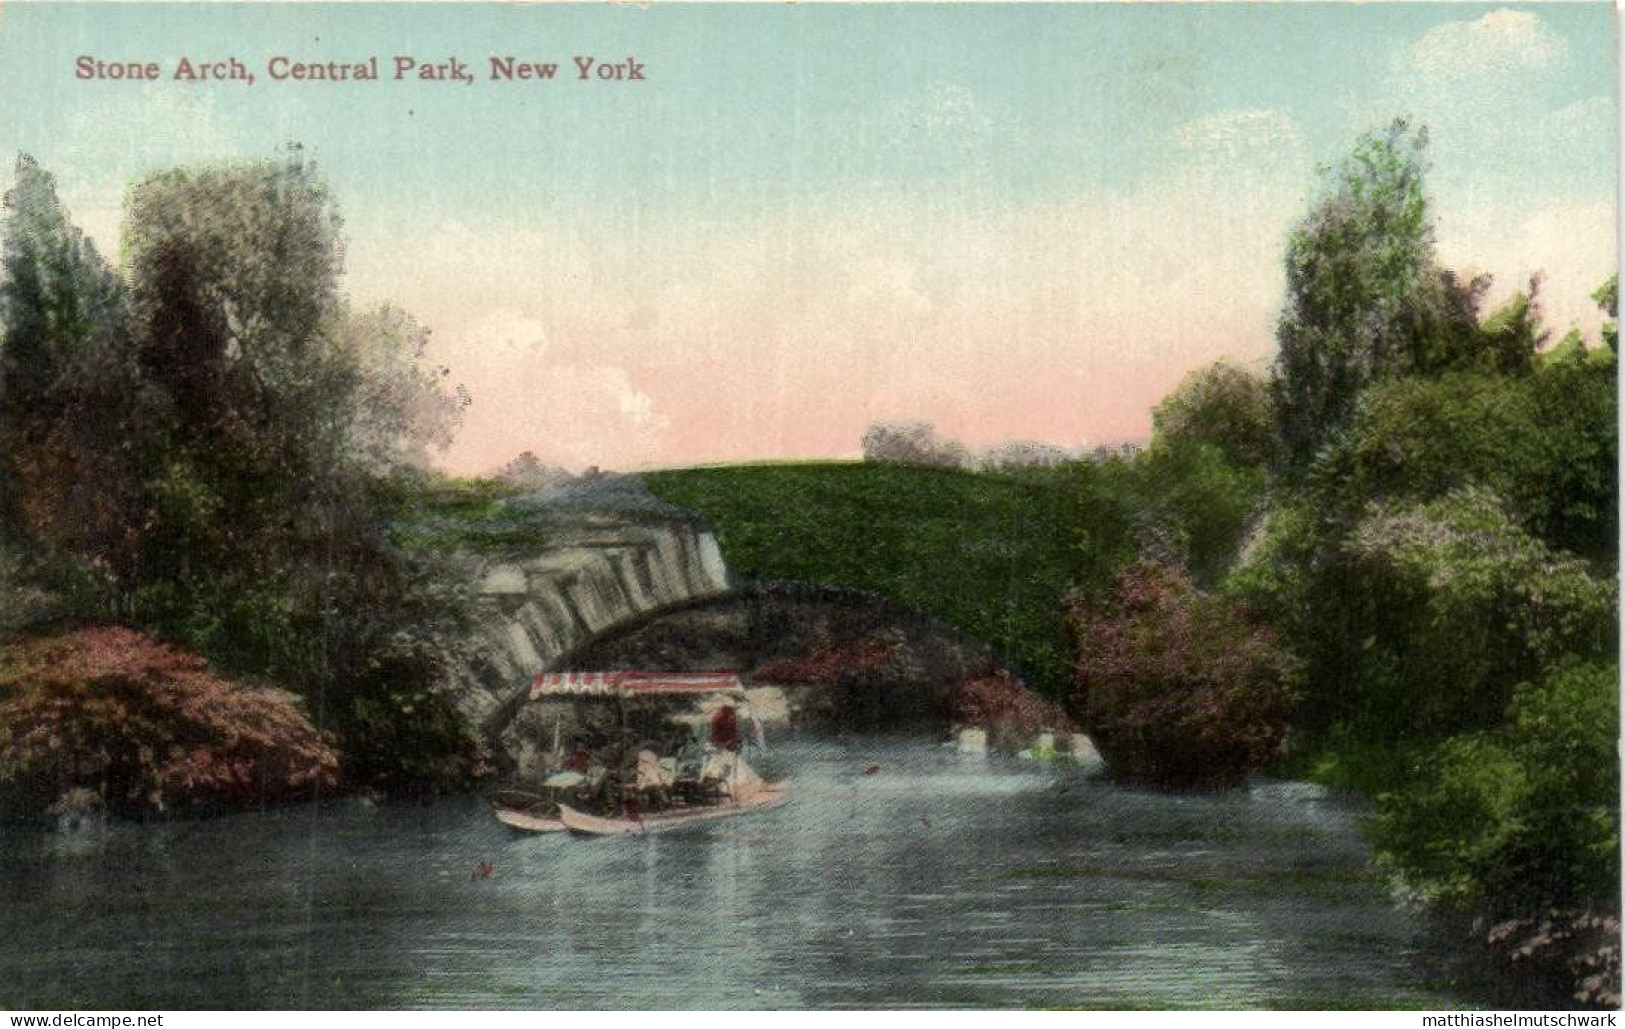 Stone Arch, Central Park - Central Park